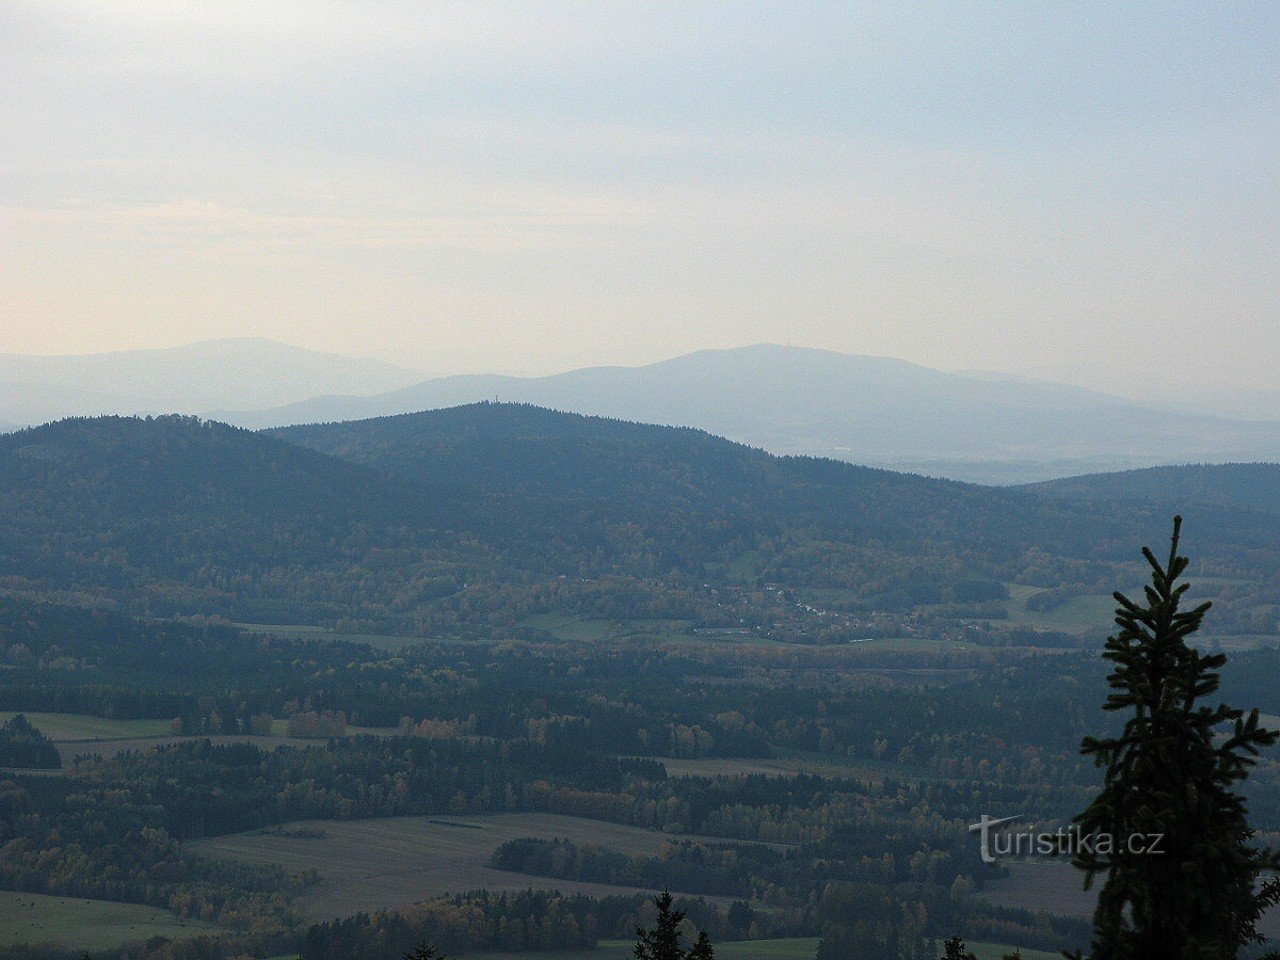 Slepíčí hory από το Kráví hora (Kleť στο βάθος)